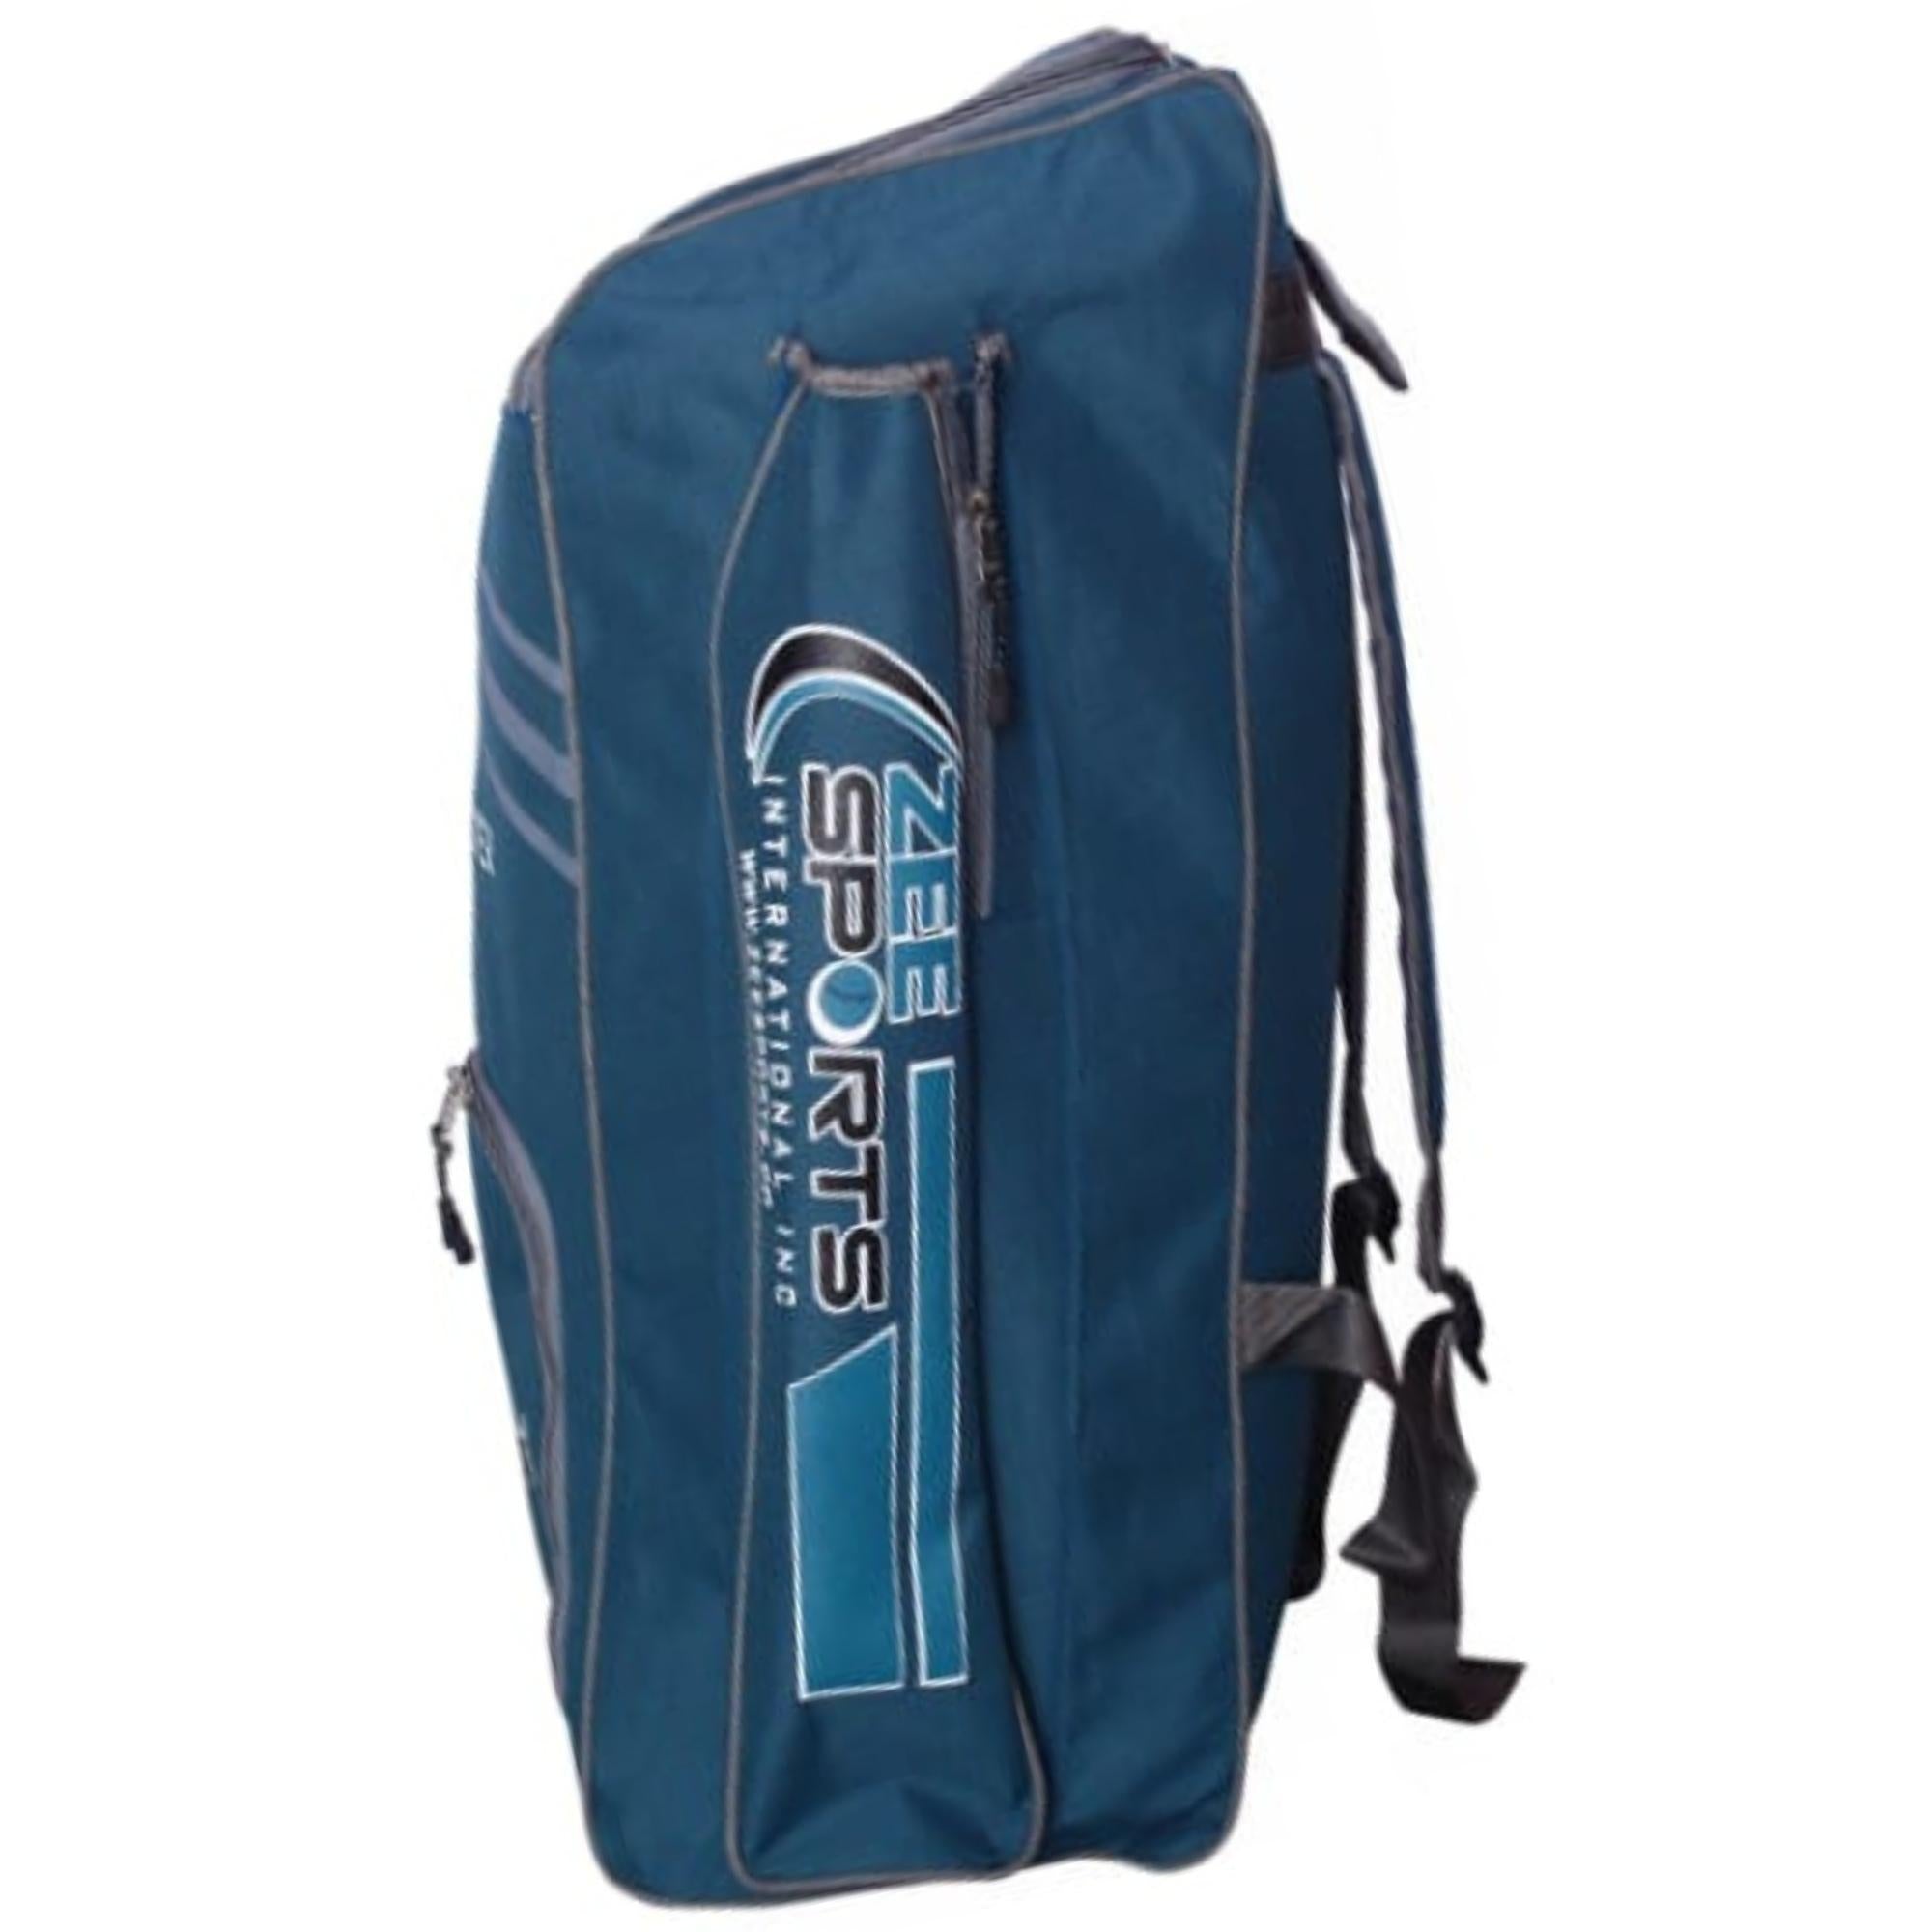 Zee Sports Kit Bag Speed Master 1.0 (Olive)